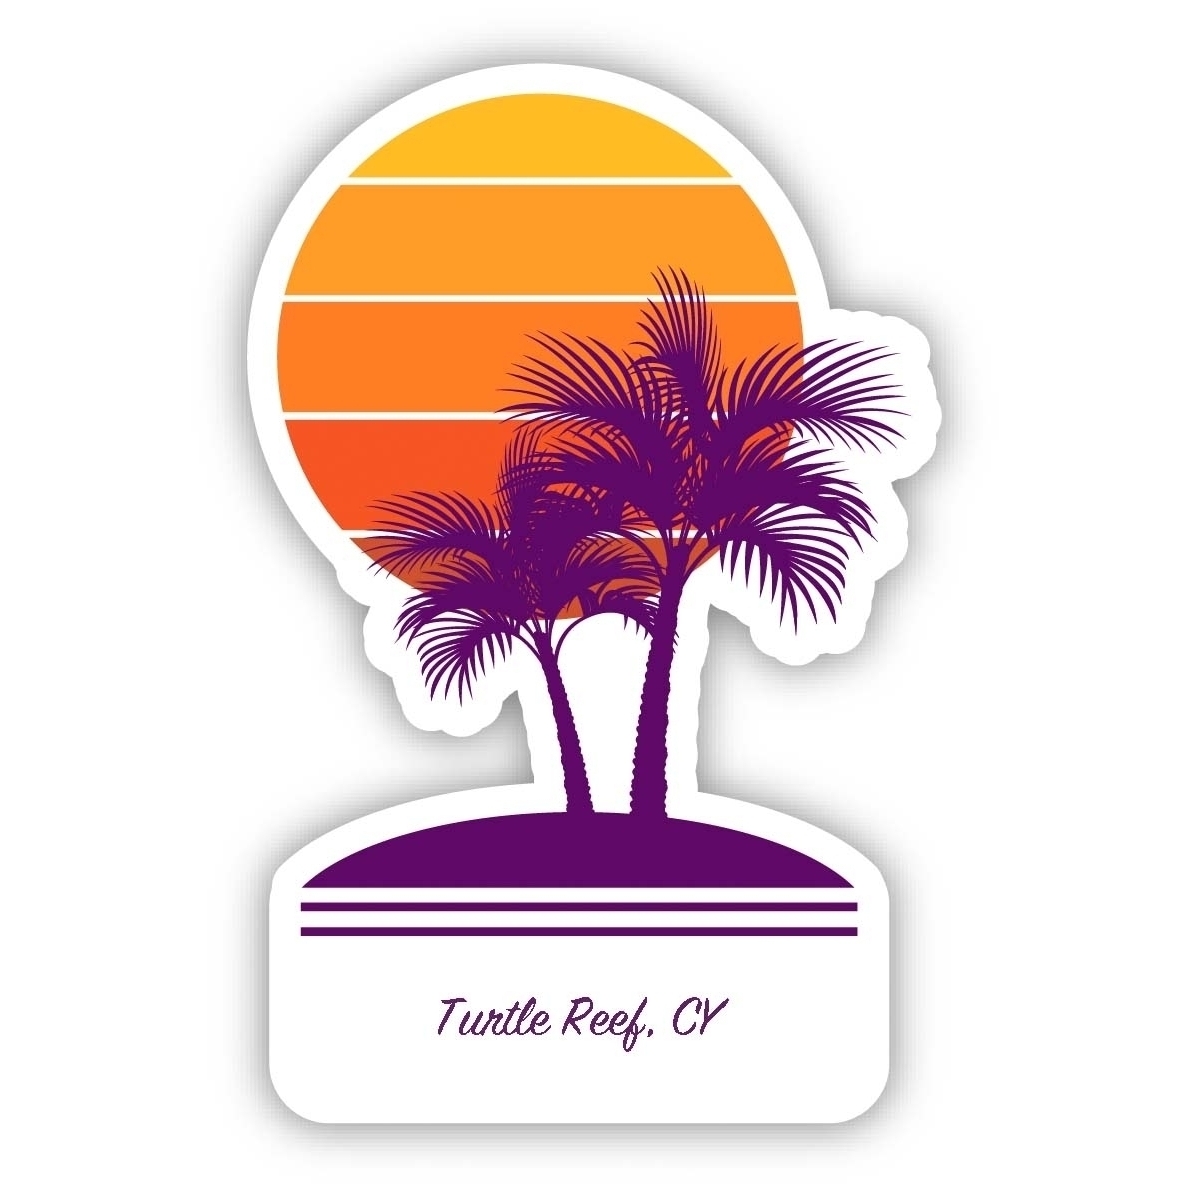 Turtle Reef Cayman Islands Souvenir 4 Inch Vinyl Decal Sticker Palm Design